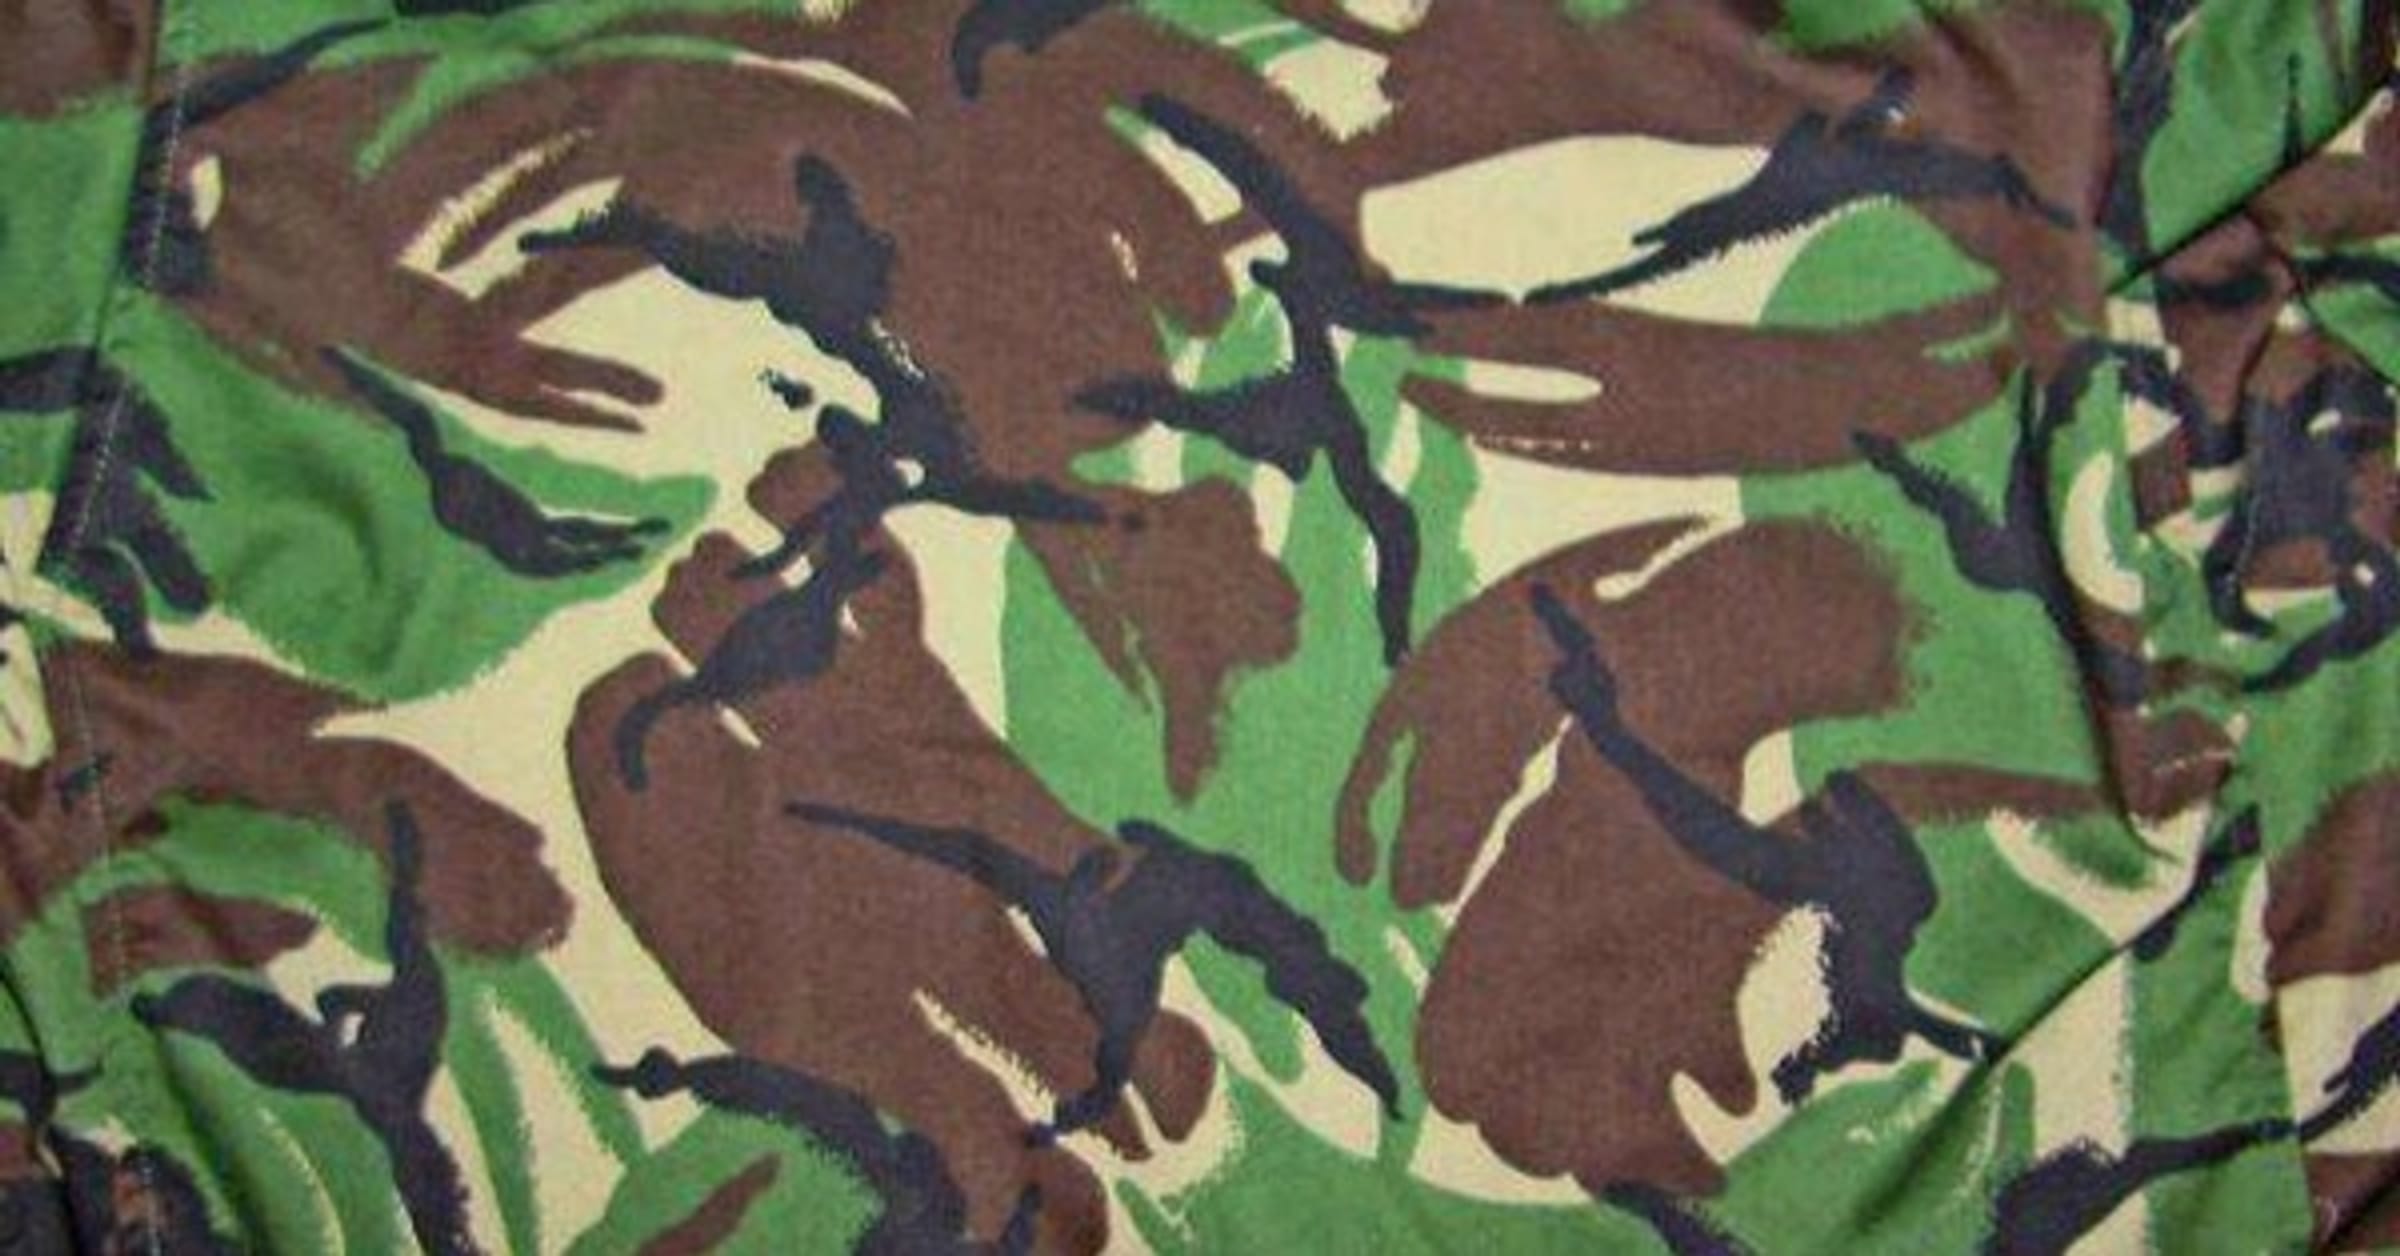 USA Desert Camouflage. USA Desert uniform camouflage pattern